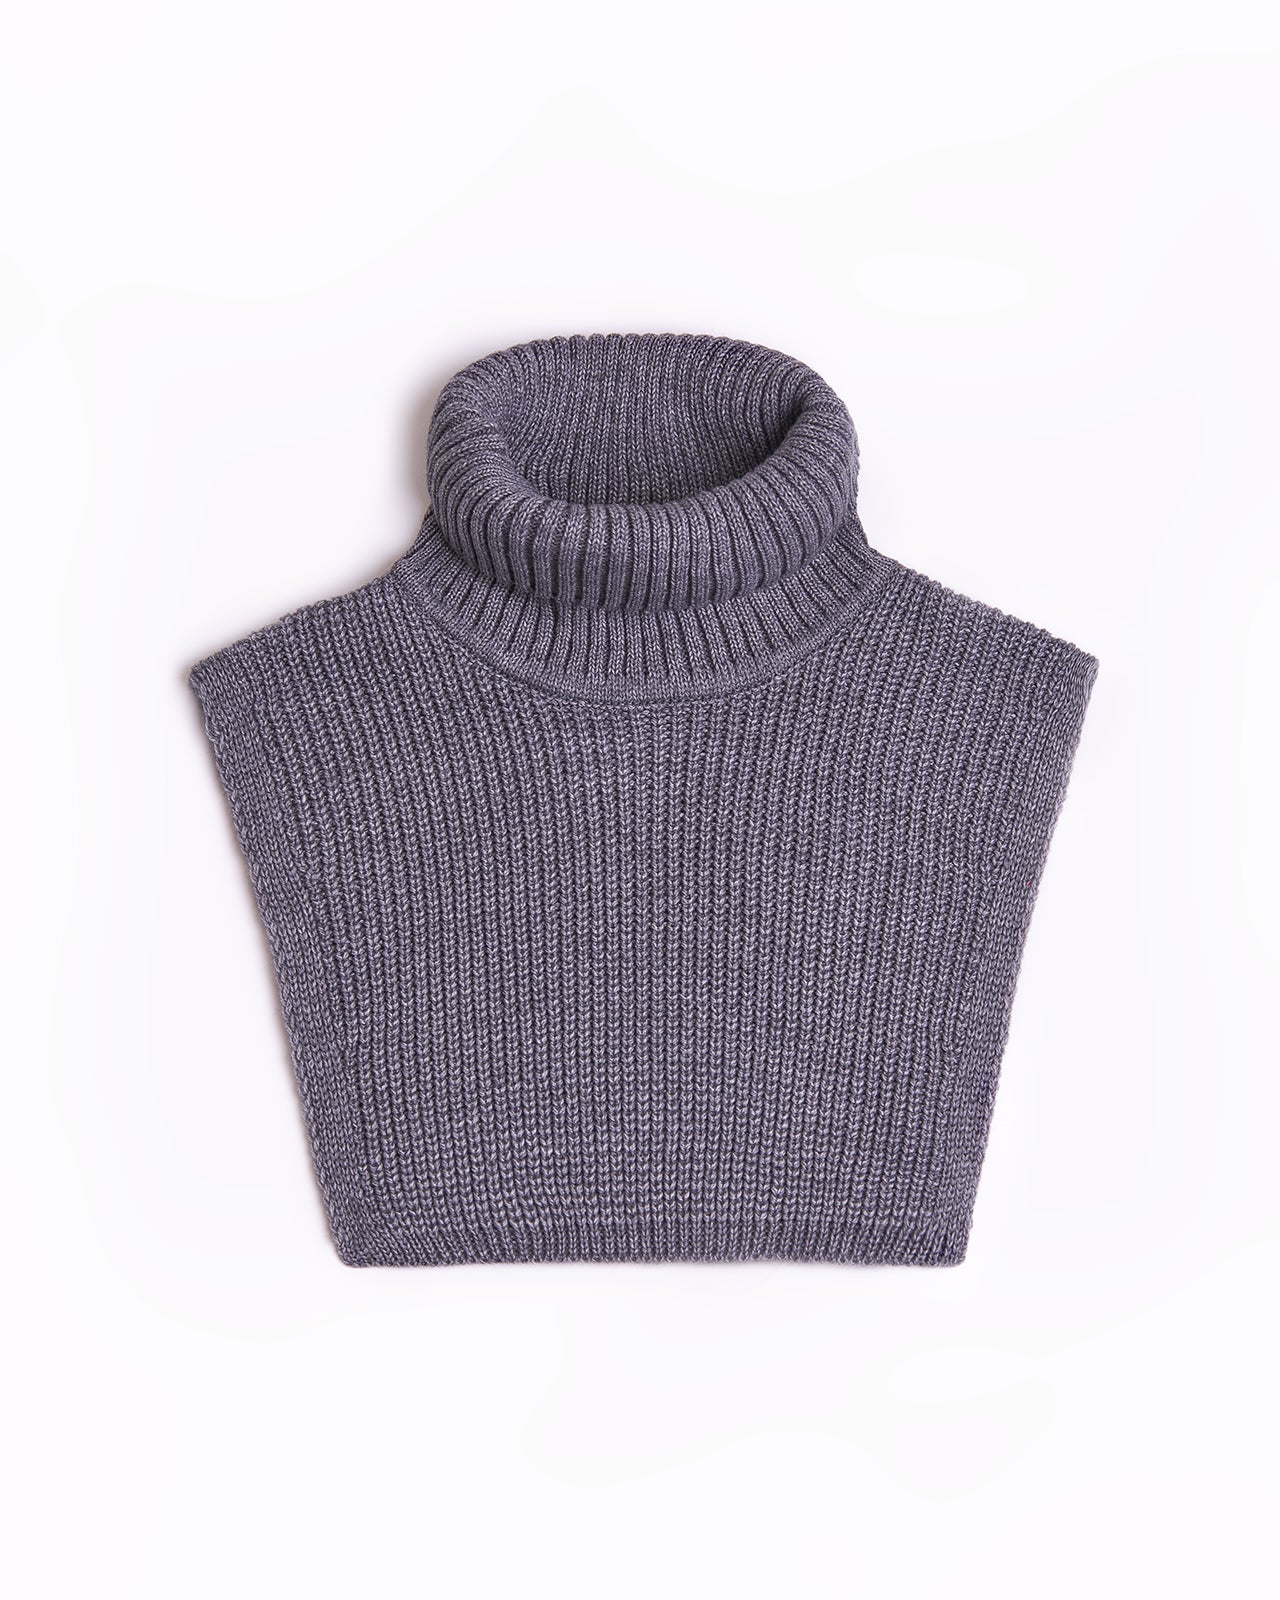 grey wool turtleneck collar